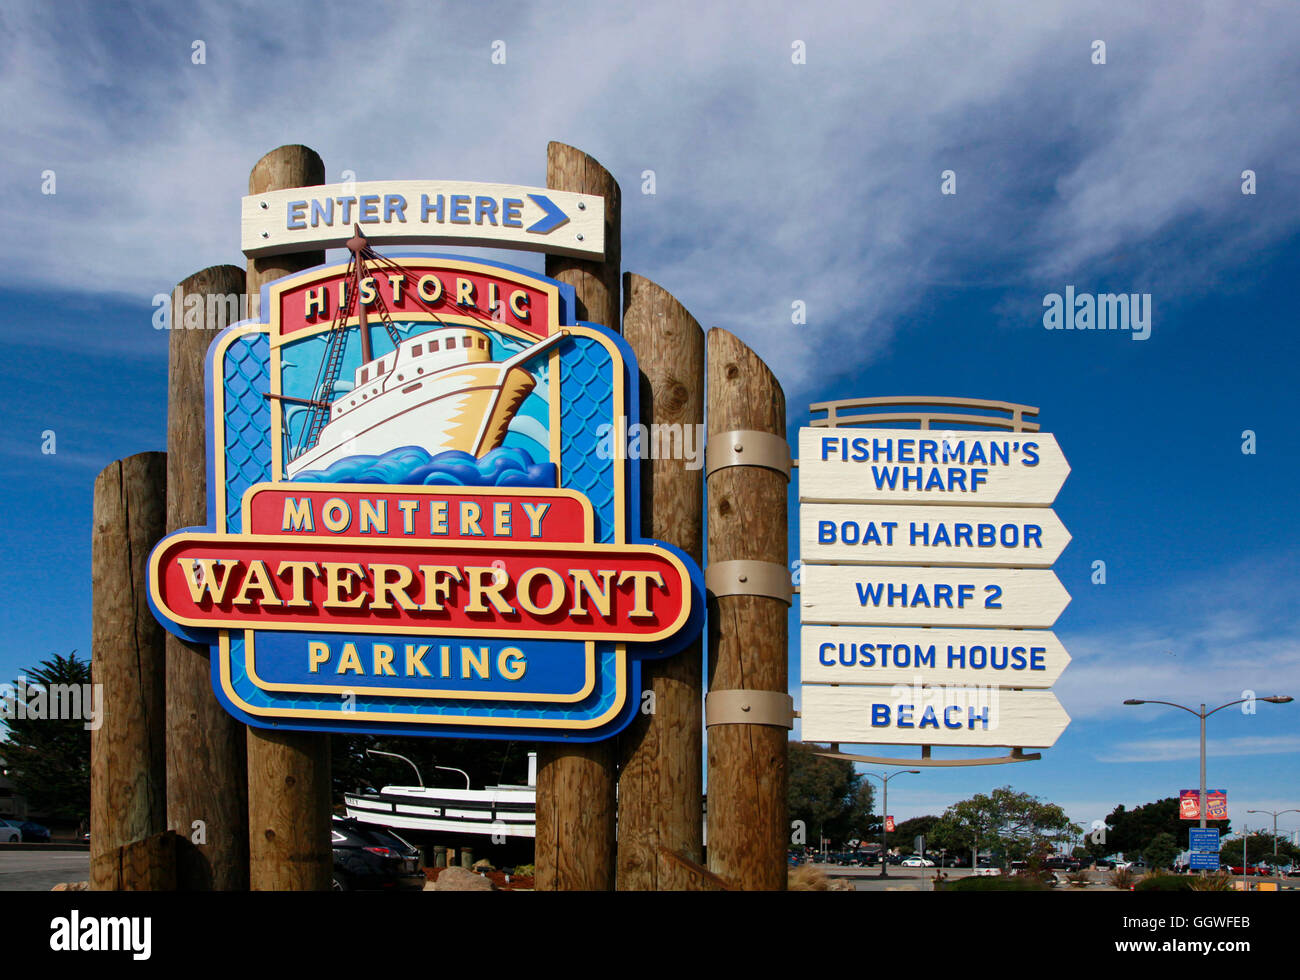 Entry sign to FISHERMAN'S WHARF - MONTEREY, CALIFORNIA Stock Photo